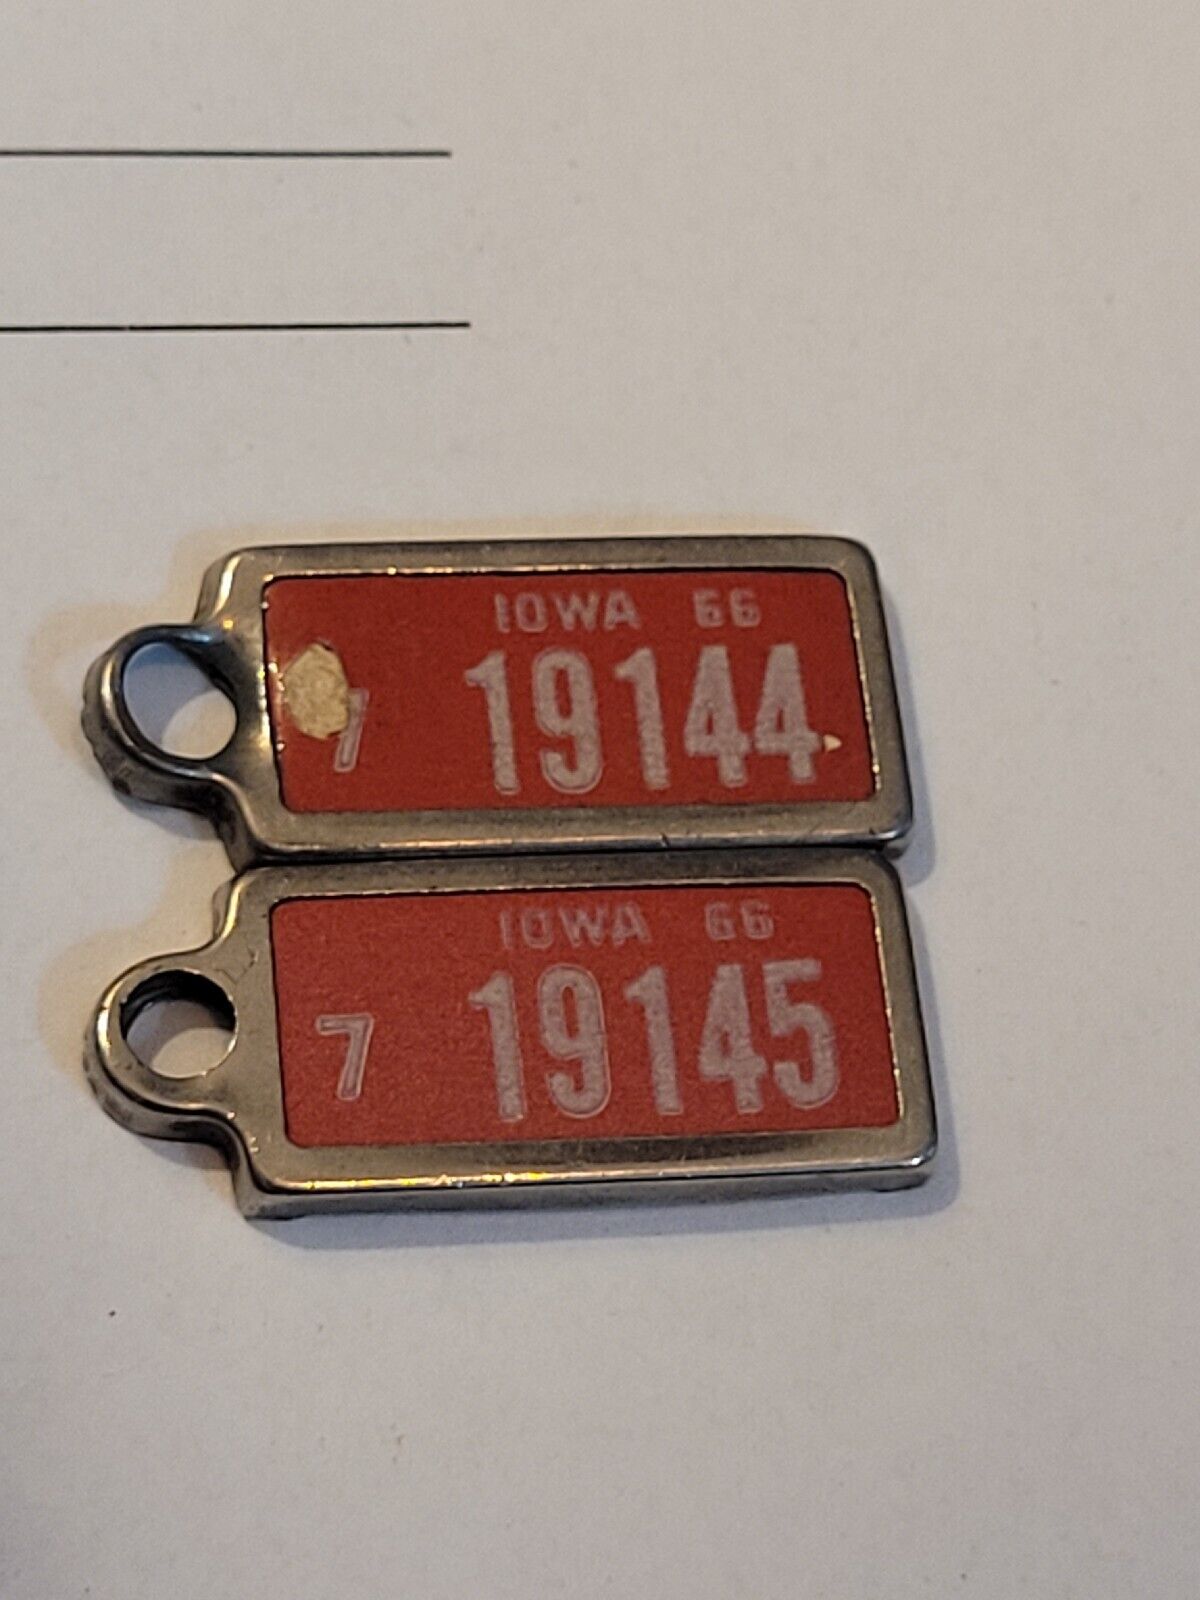 2 DAV 1966 Iowa keychain license plate tag # 7 19144 #7 19145 * METAL * CAR/FOB